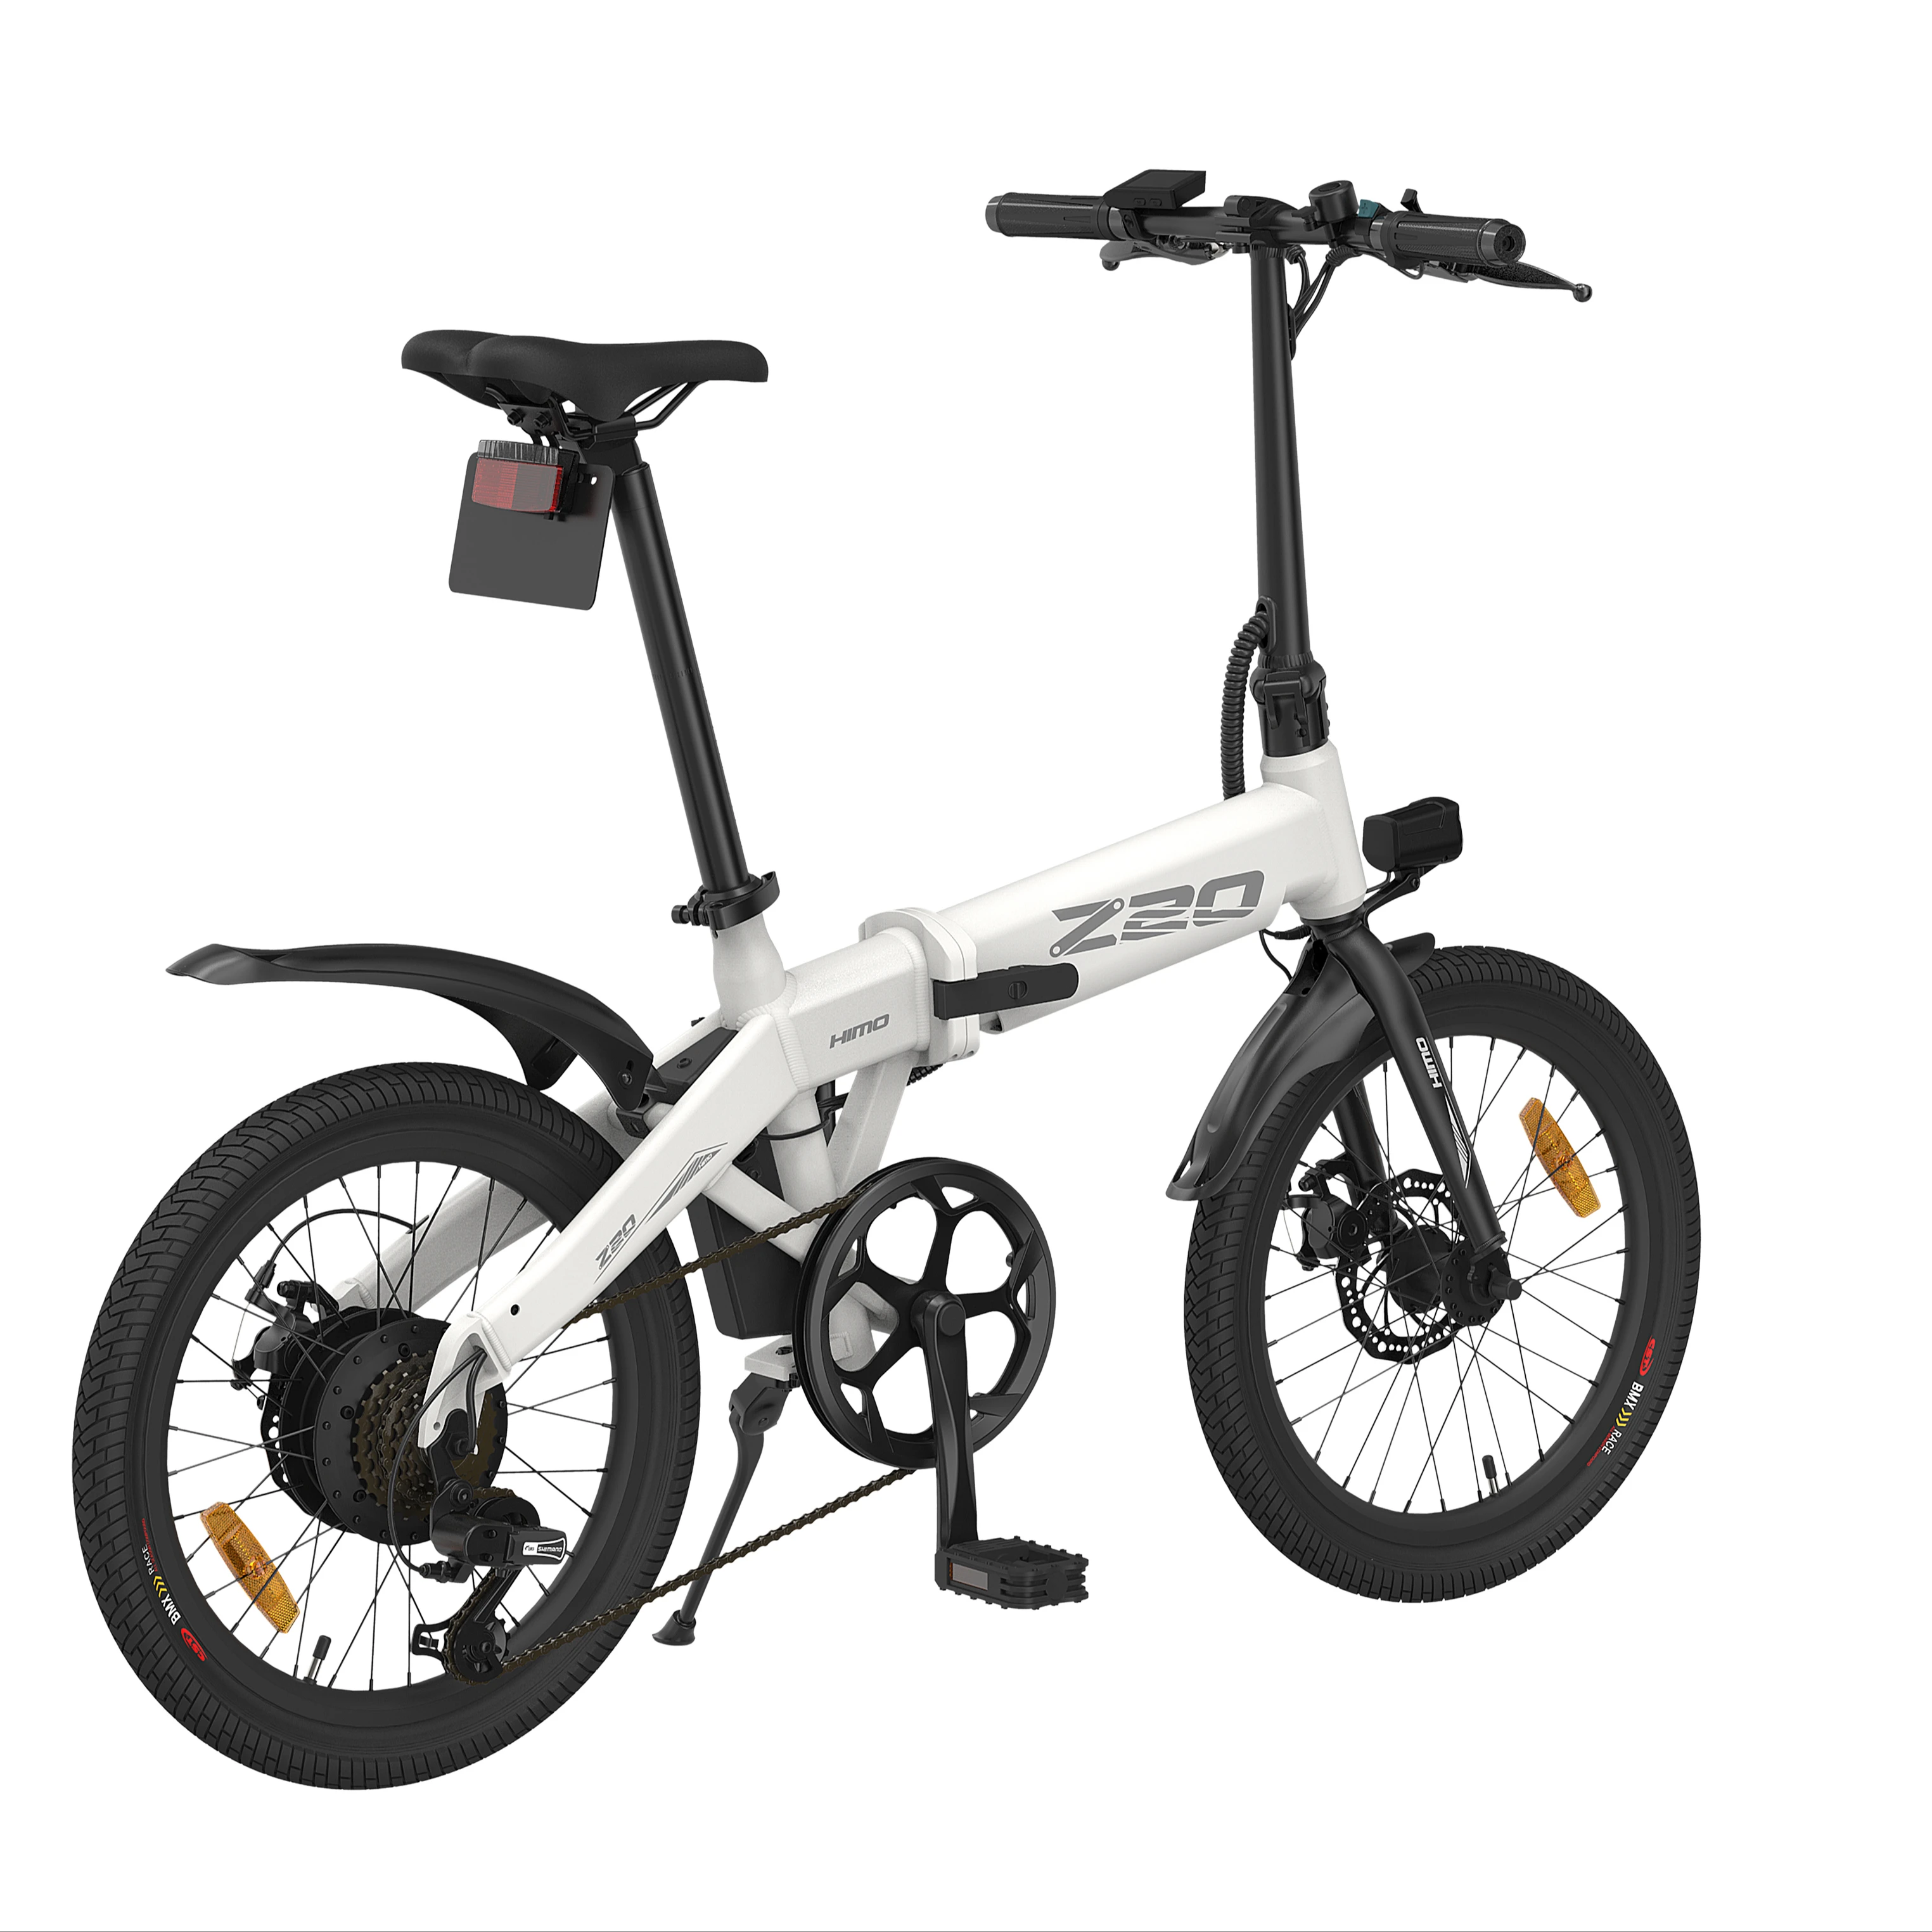 

HIMO Z20 mid drive direct sales retro e-bike sur ron electric bicycle folding bike ebike velo electrique bici elettrica